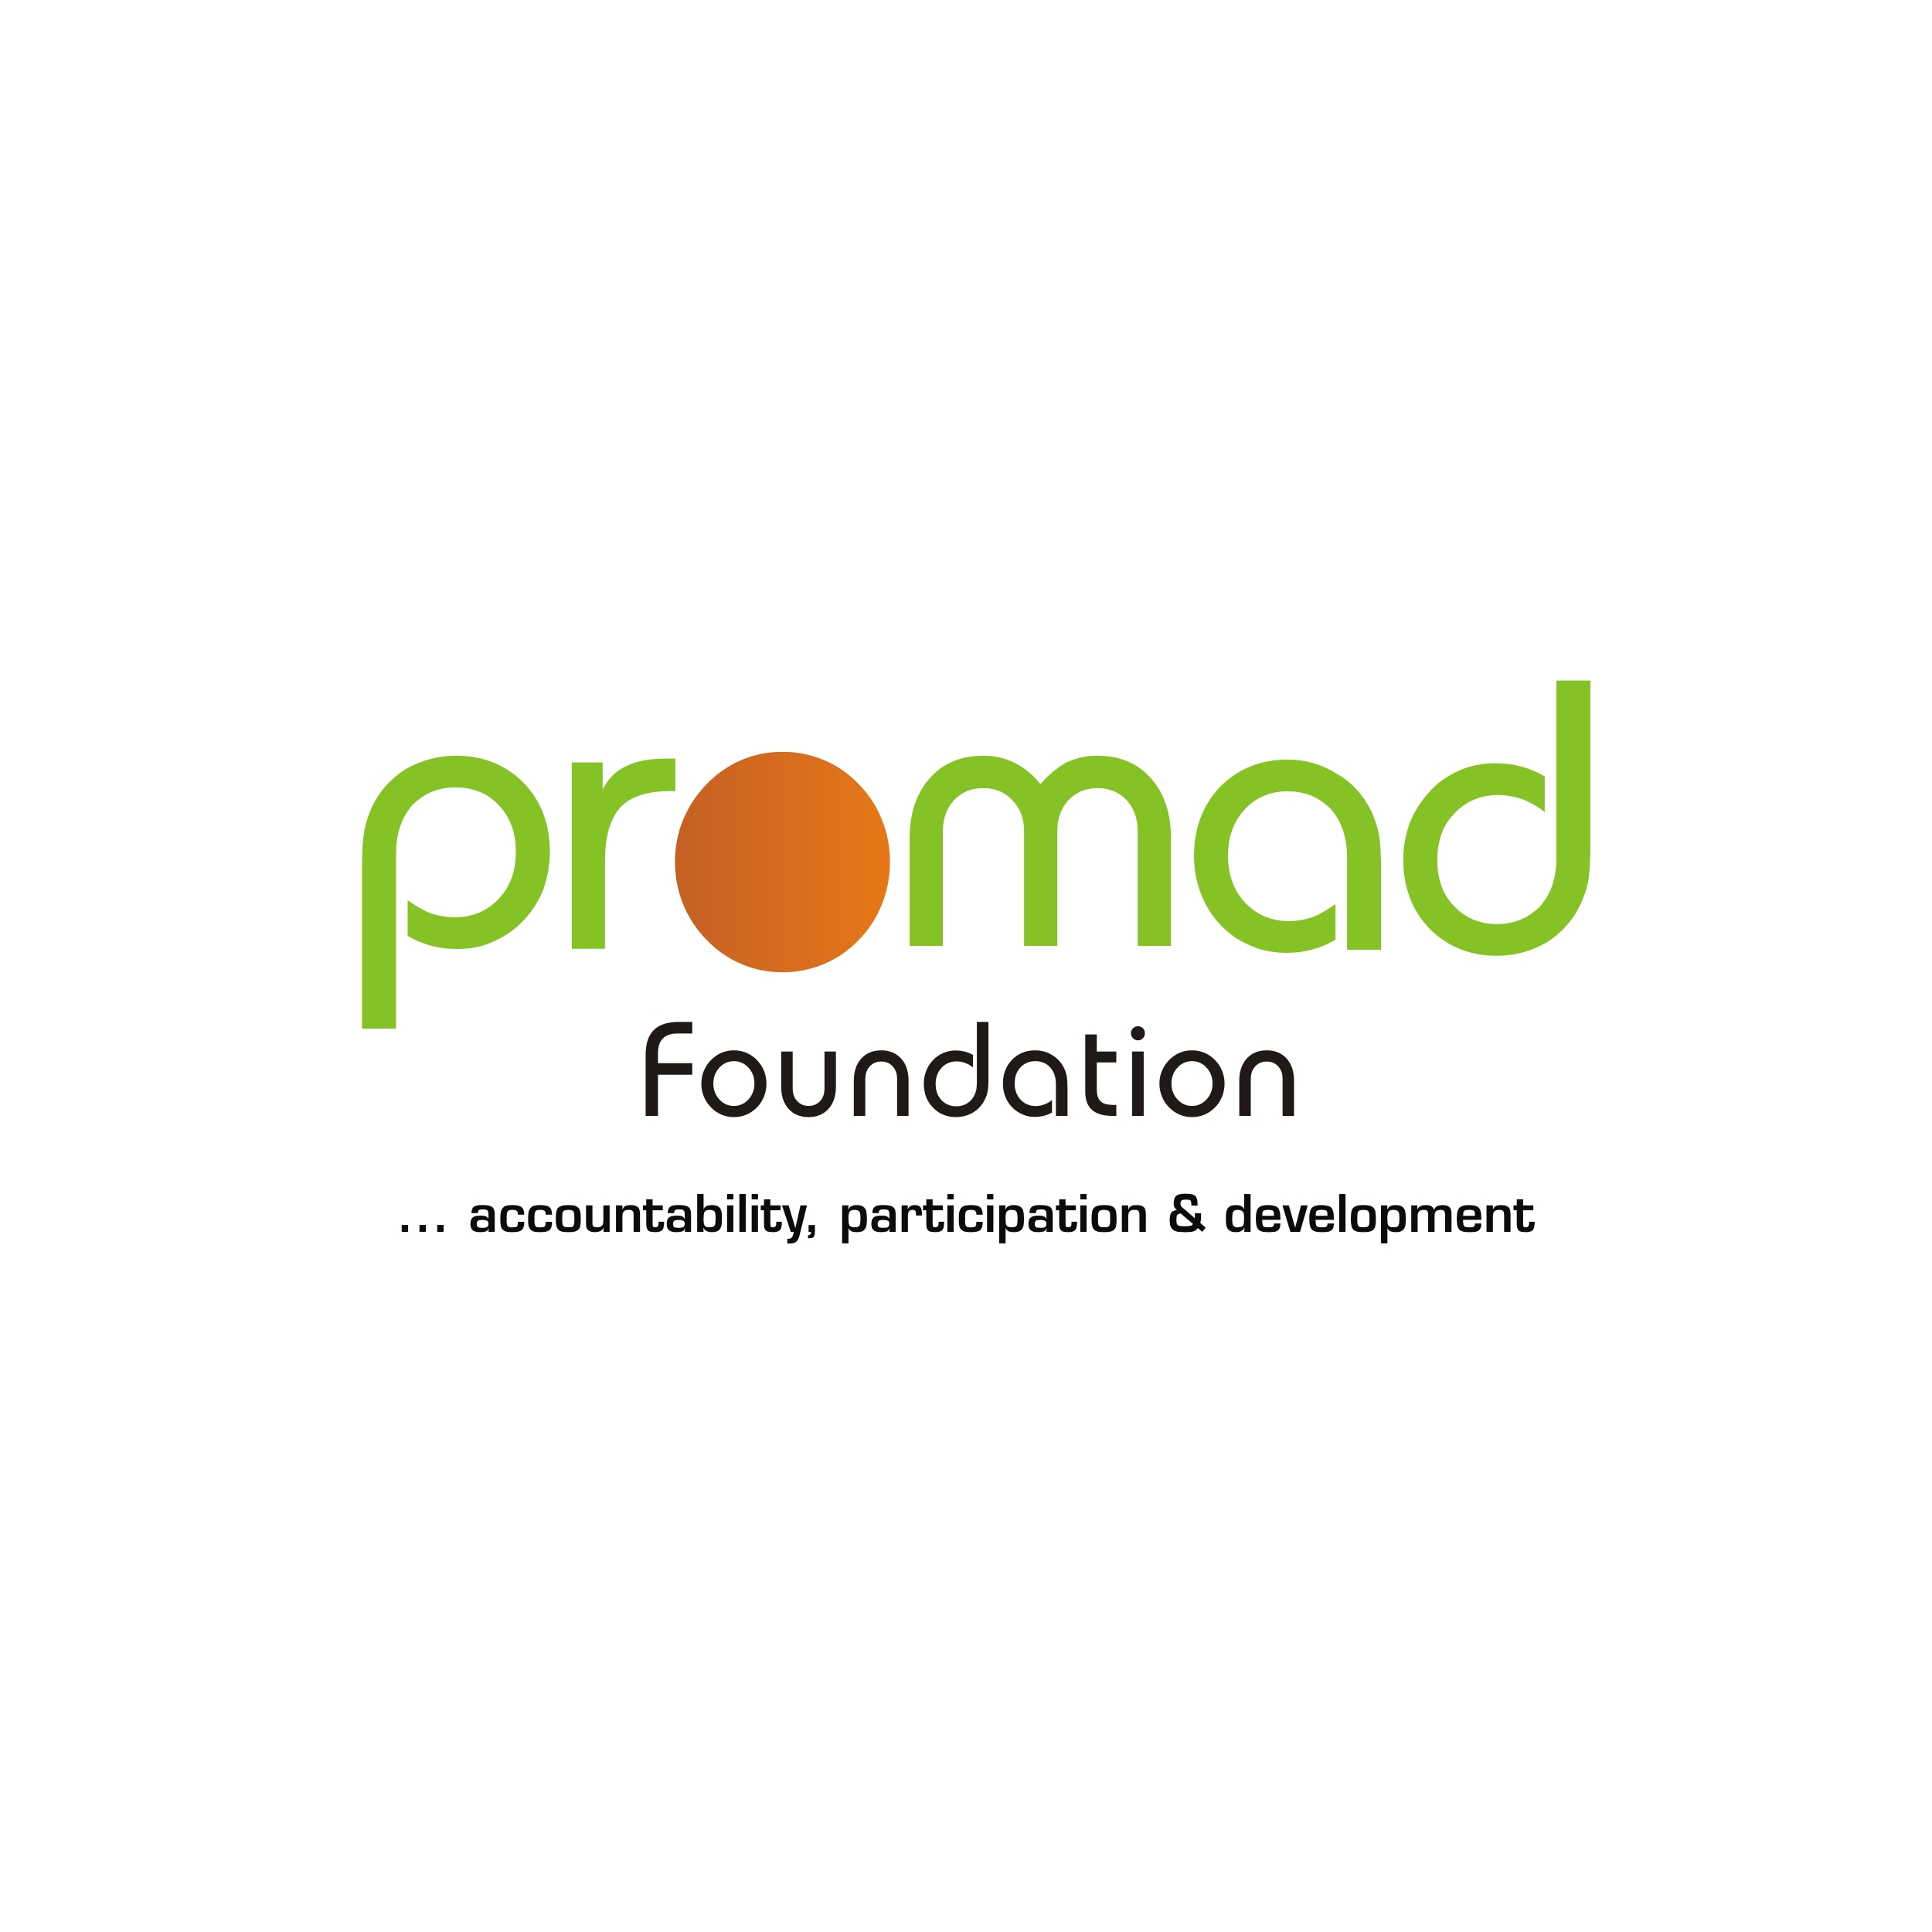 PROMAD Foundation